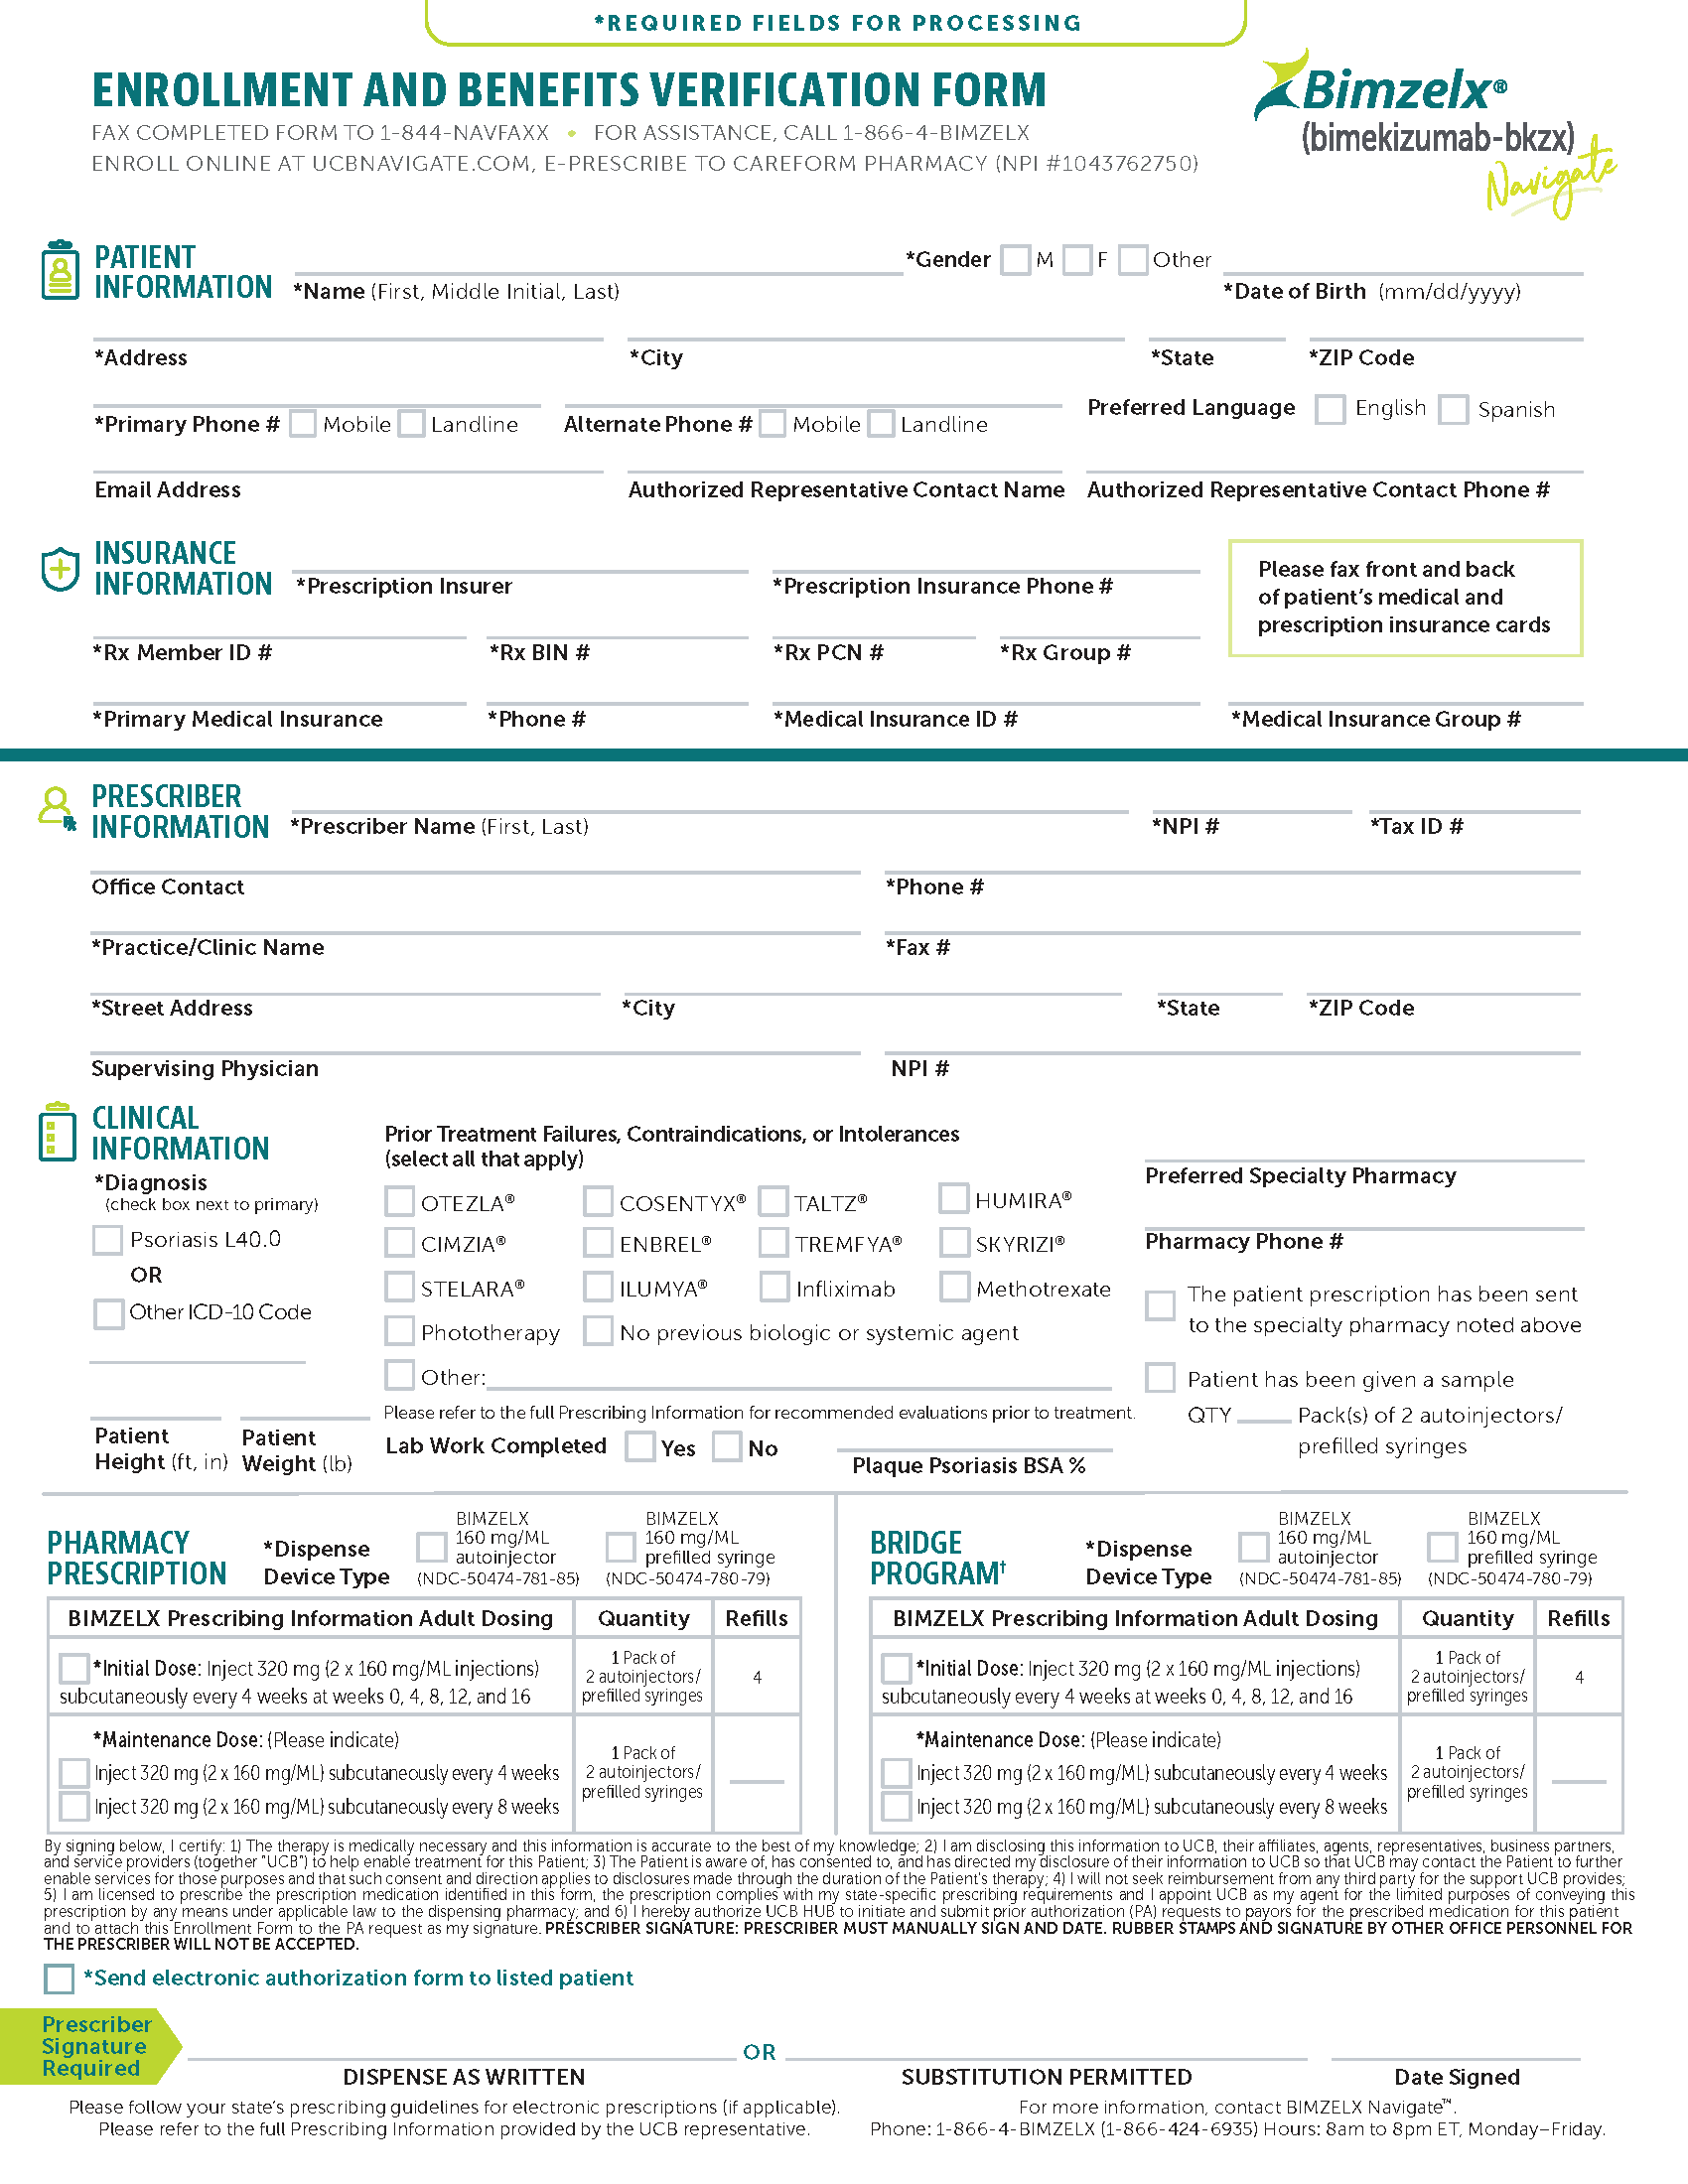 Patient Enrollment Form